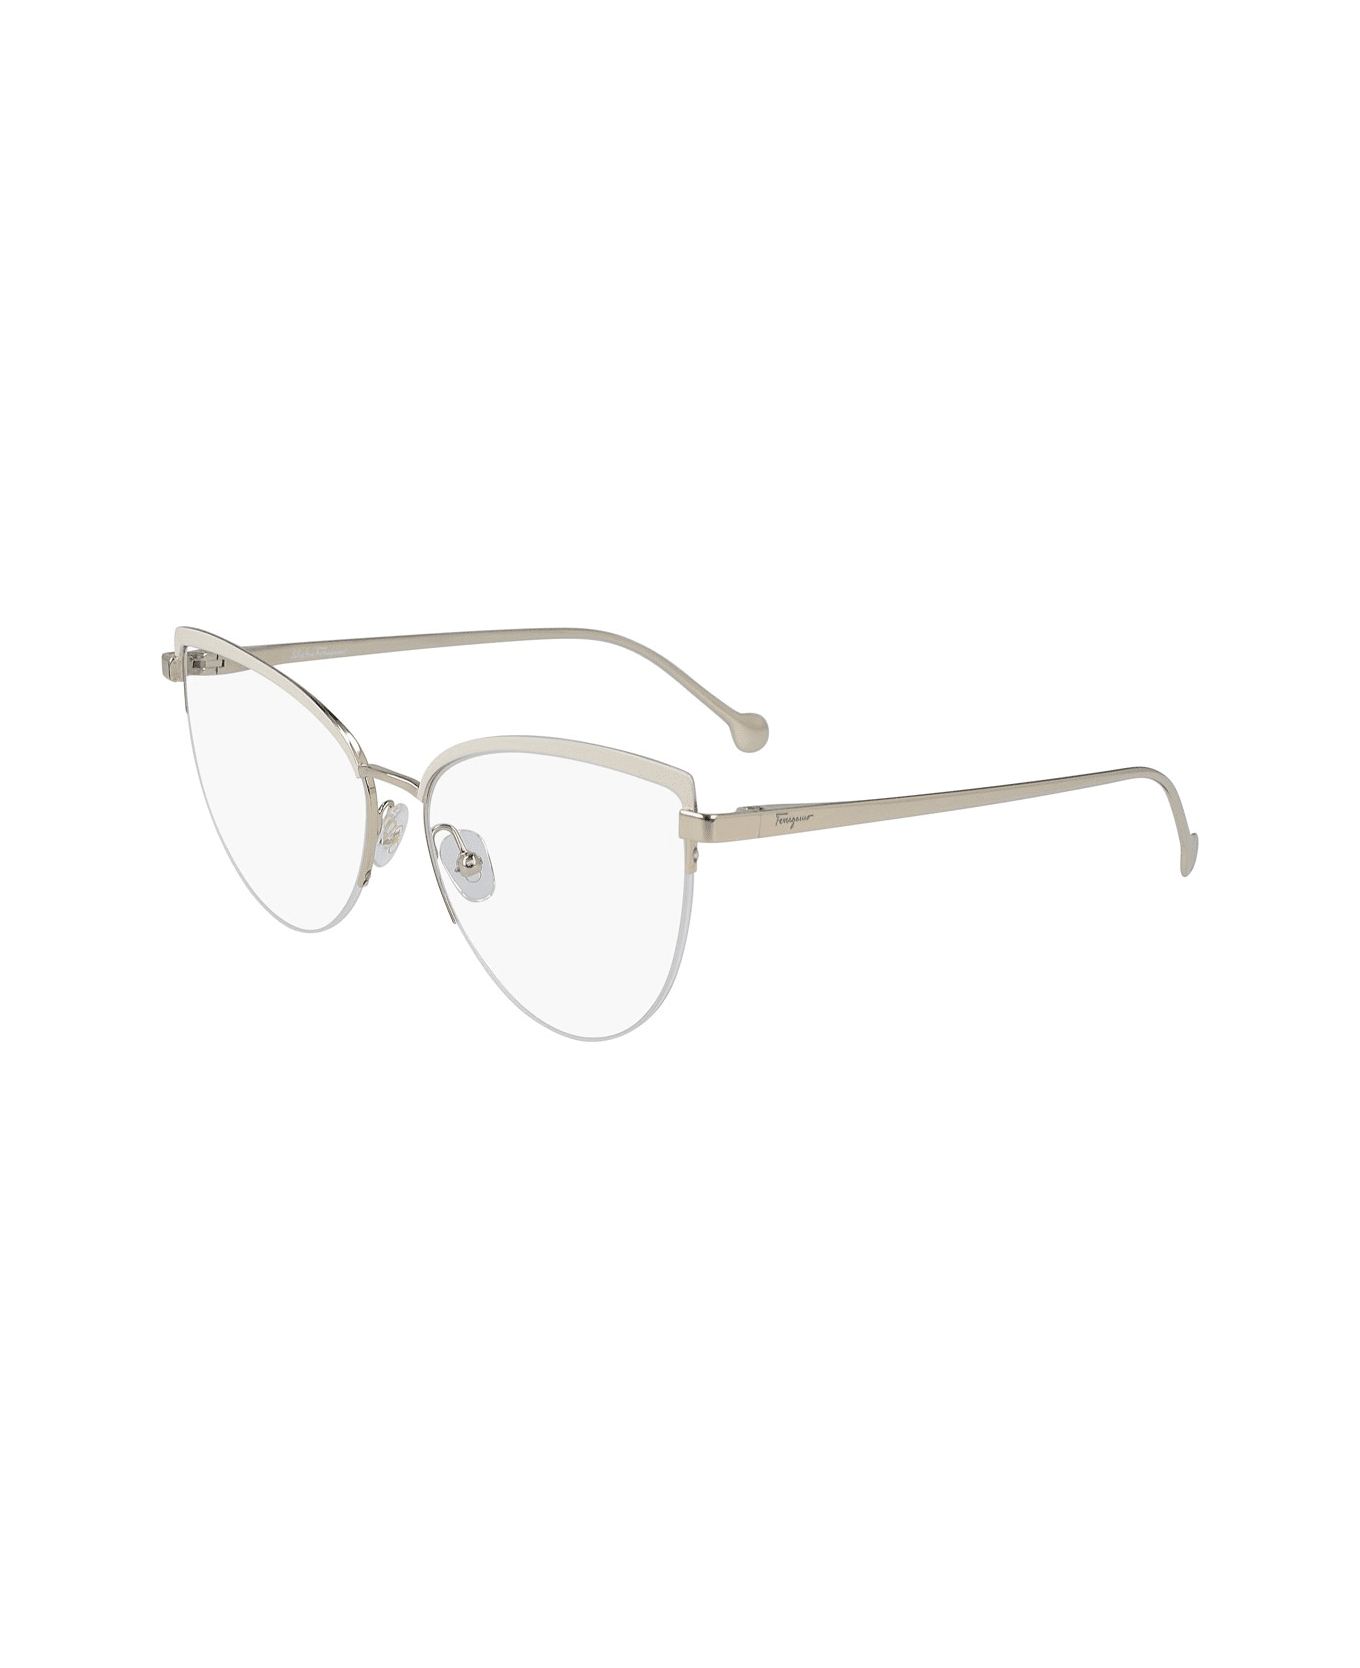 Salvatore Ferragamo Eyewear Sf2175 Glasses - Oro